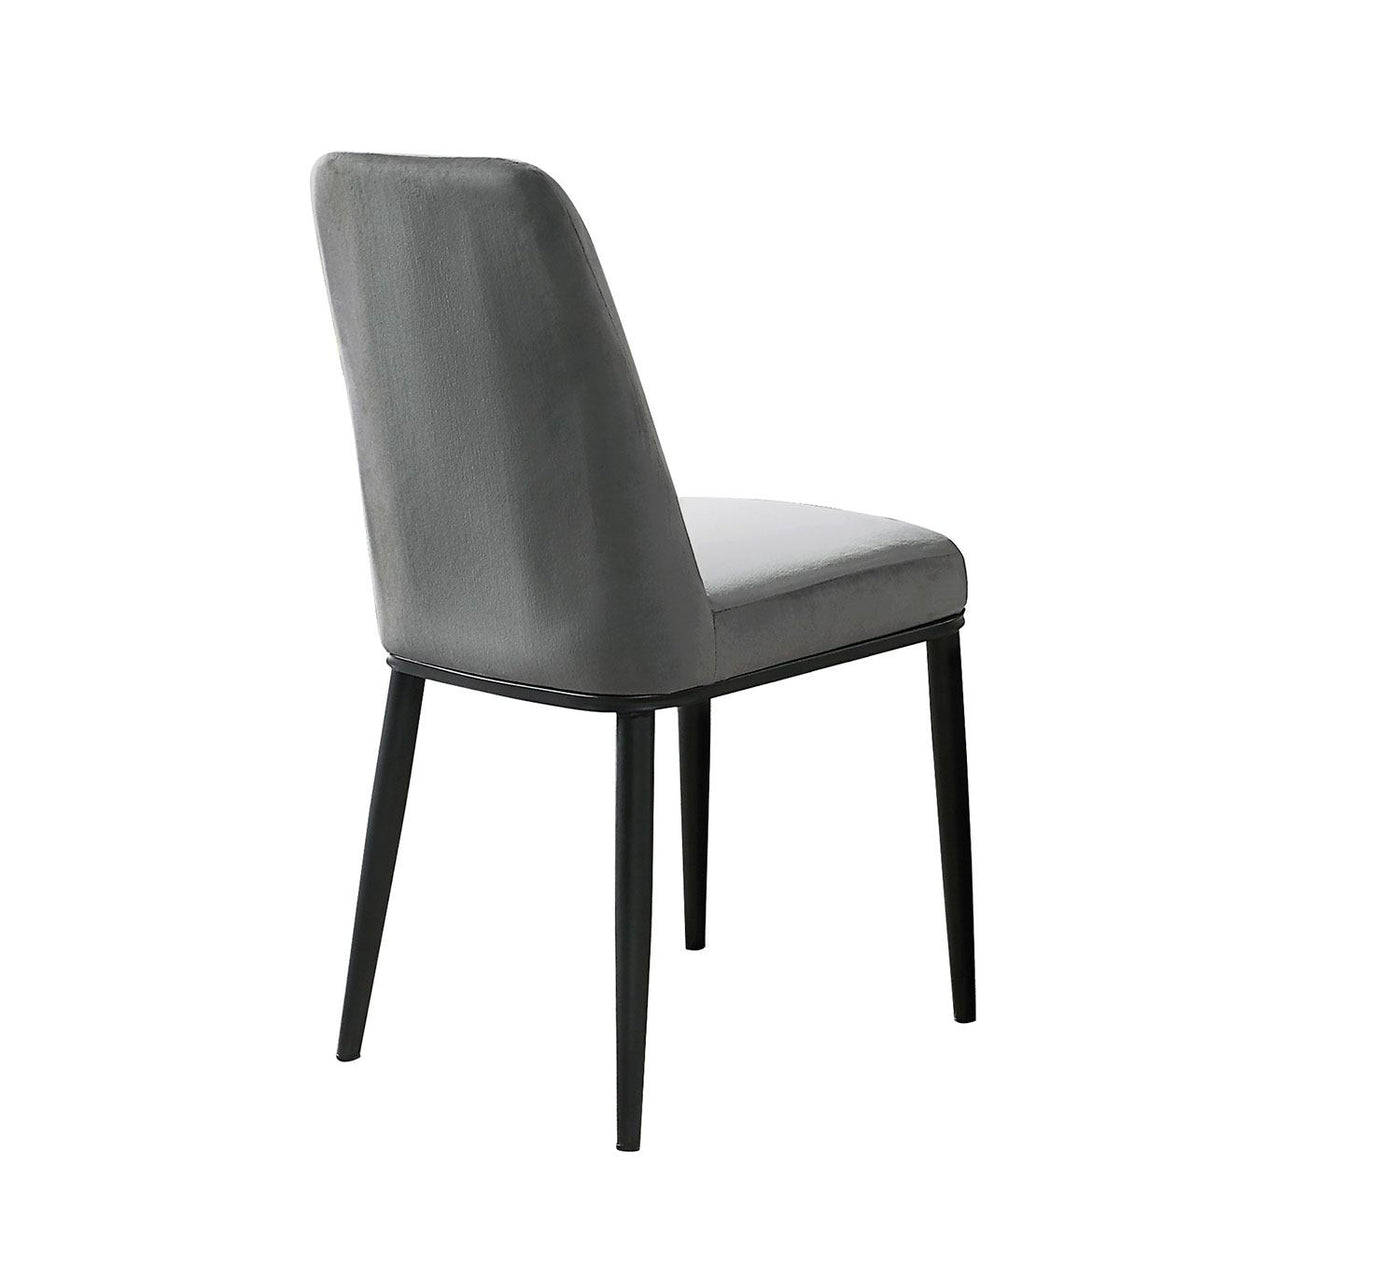 Emberly Dining Chair - Grey, Black